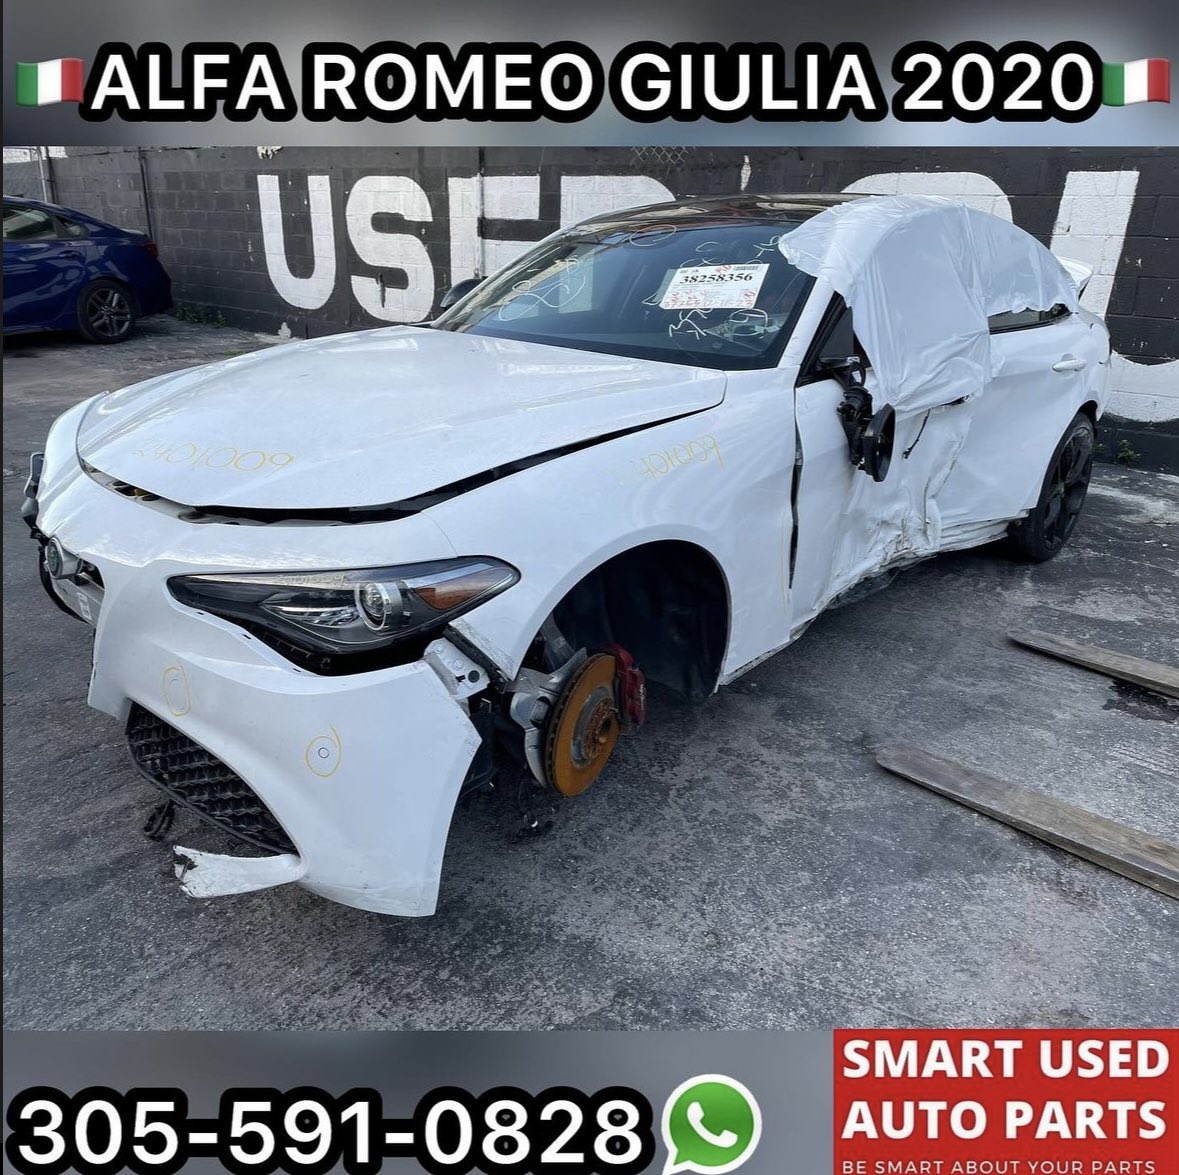 ALFA ROMEO GIULIA 2020 🇮🇹🇮🇹🇮🇹
FOR PARTS‼️
305-591-0828
.
.
.
#alfa #alfaromeo #alfaromeogiulia #giulia #romeo #usedautoparts #carparts #junkyard #italian #racing #parts #autopartes #autopartsforsale #autorepair #newinventoryinstock